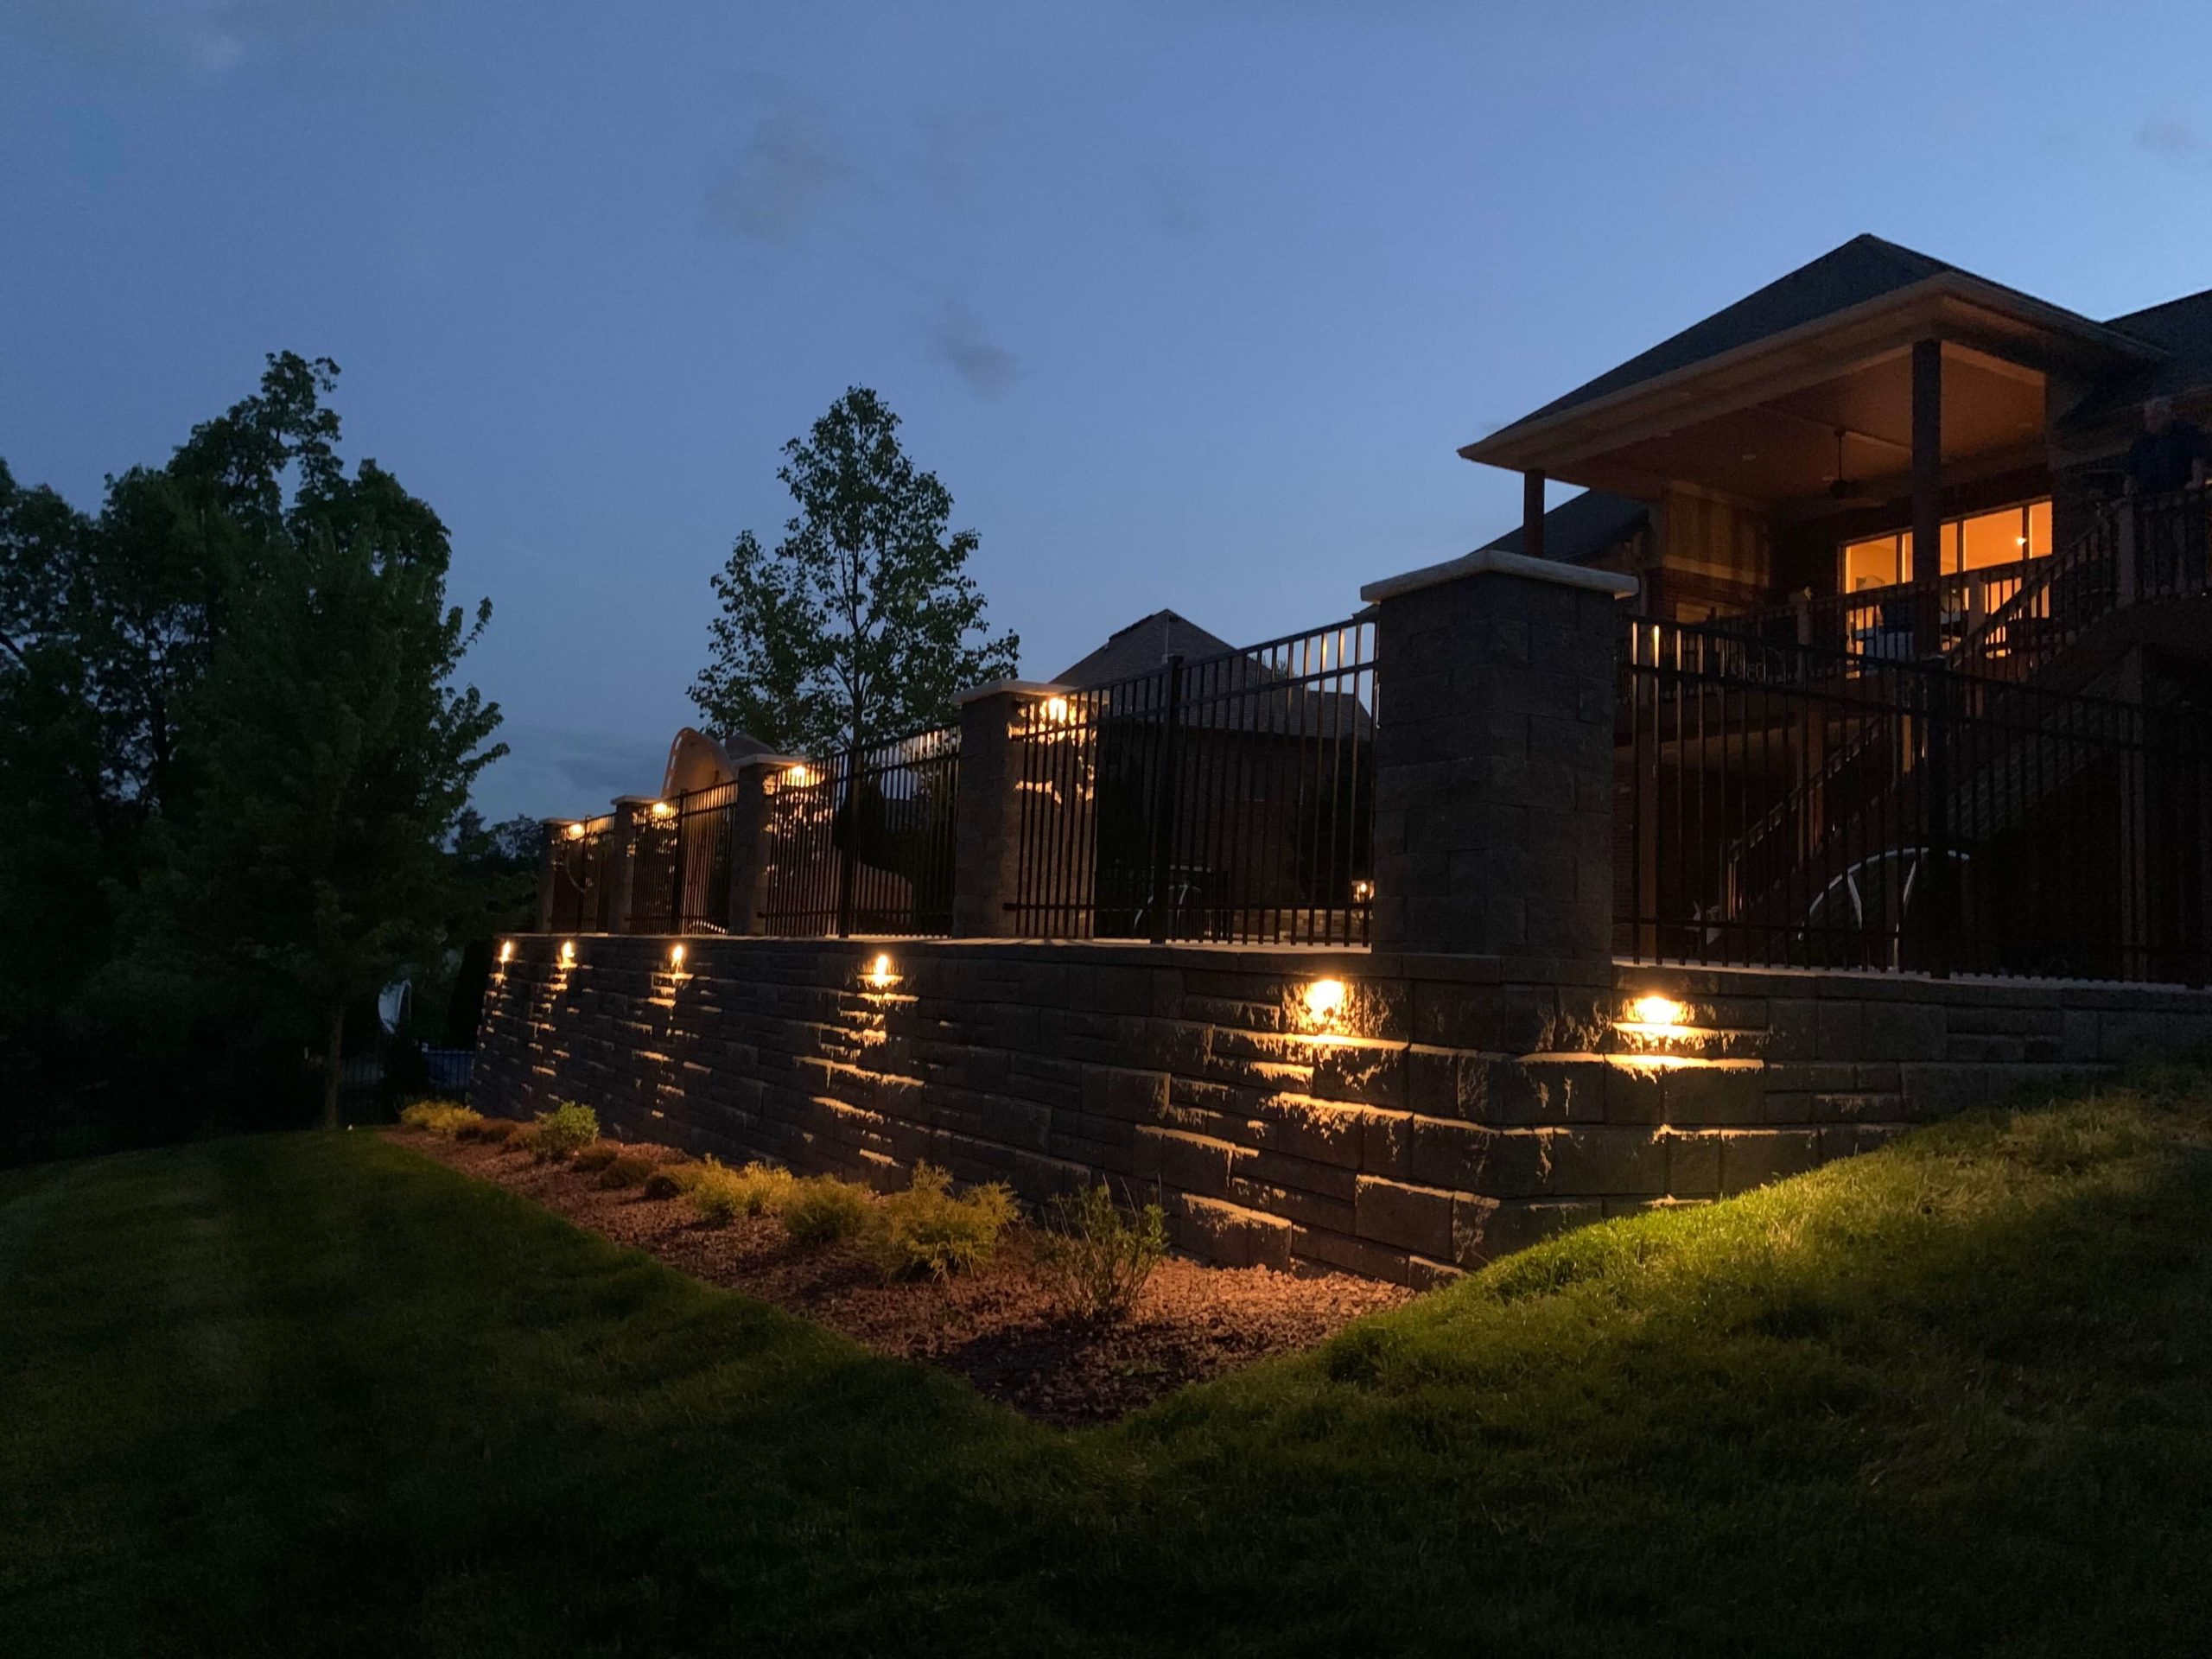 Lighted backyard terrace at night